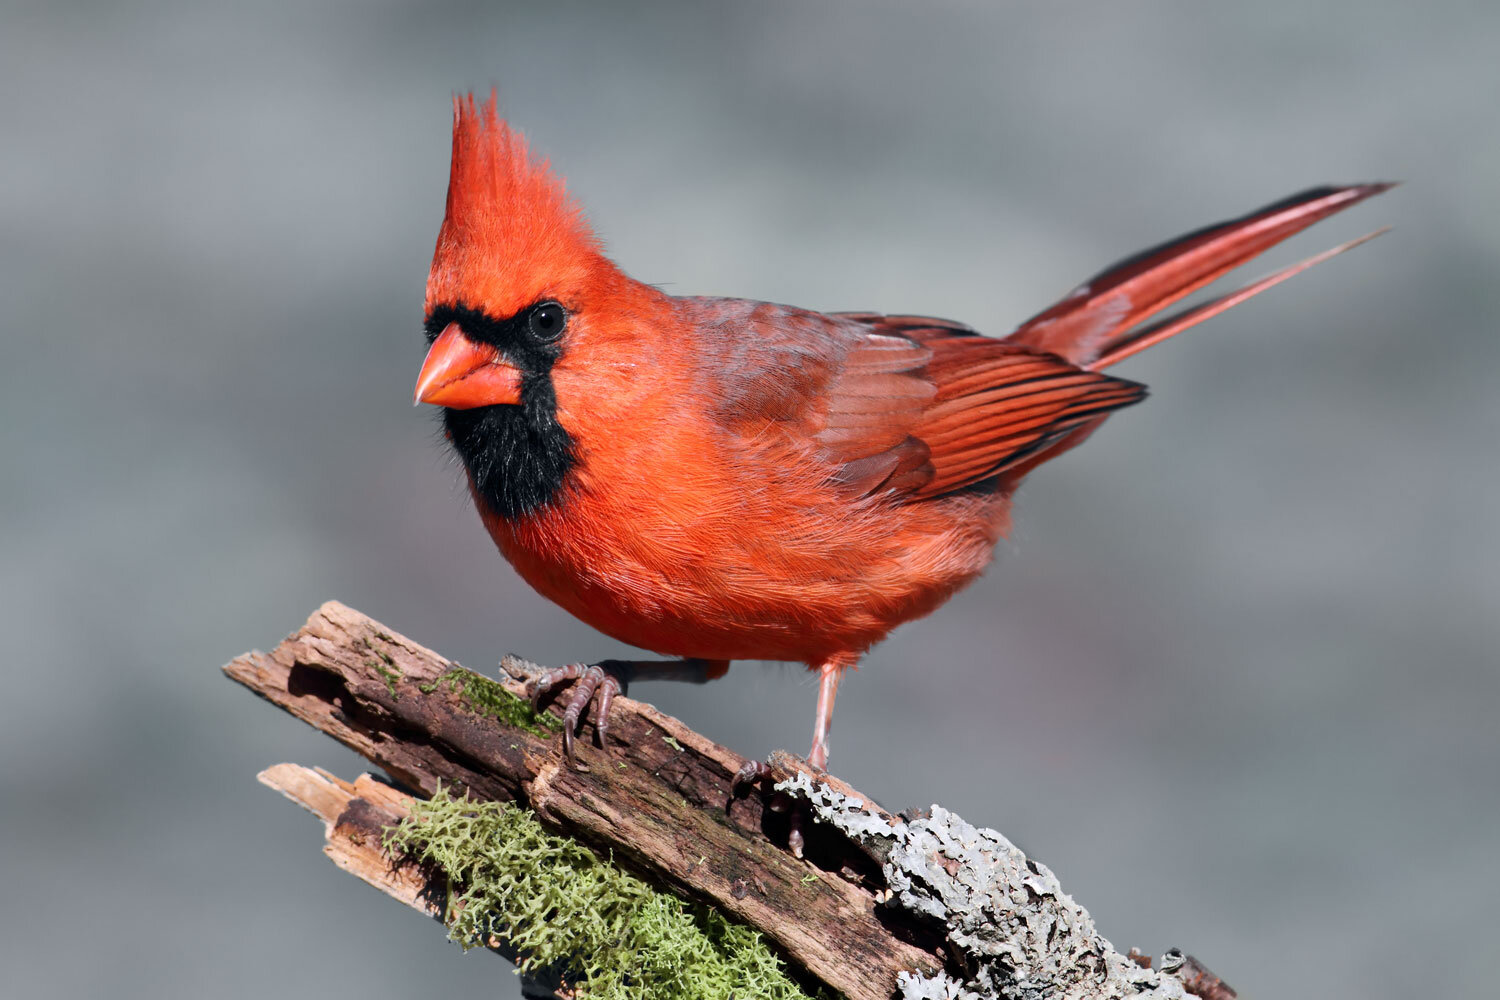 Audubon Park Waste Free Wild Bird Food, Dry, 15 lbs.